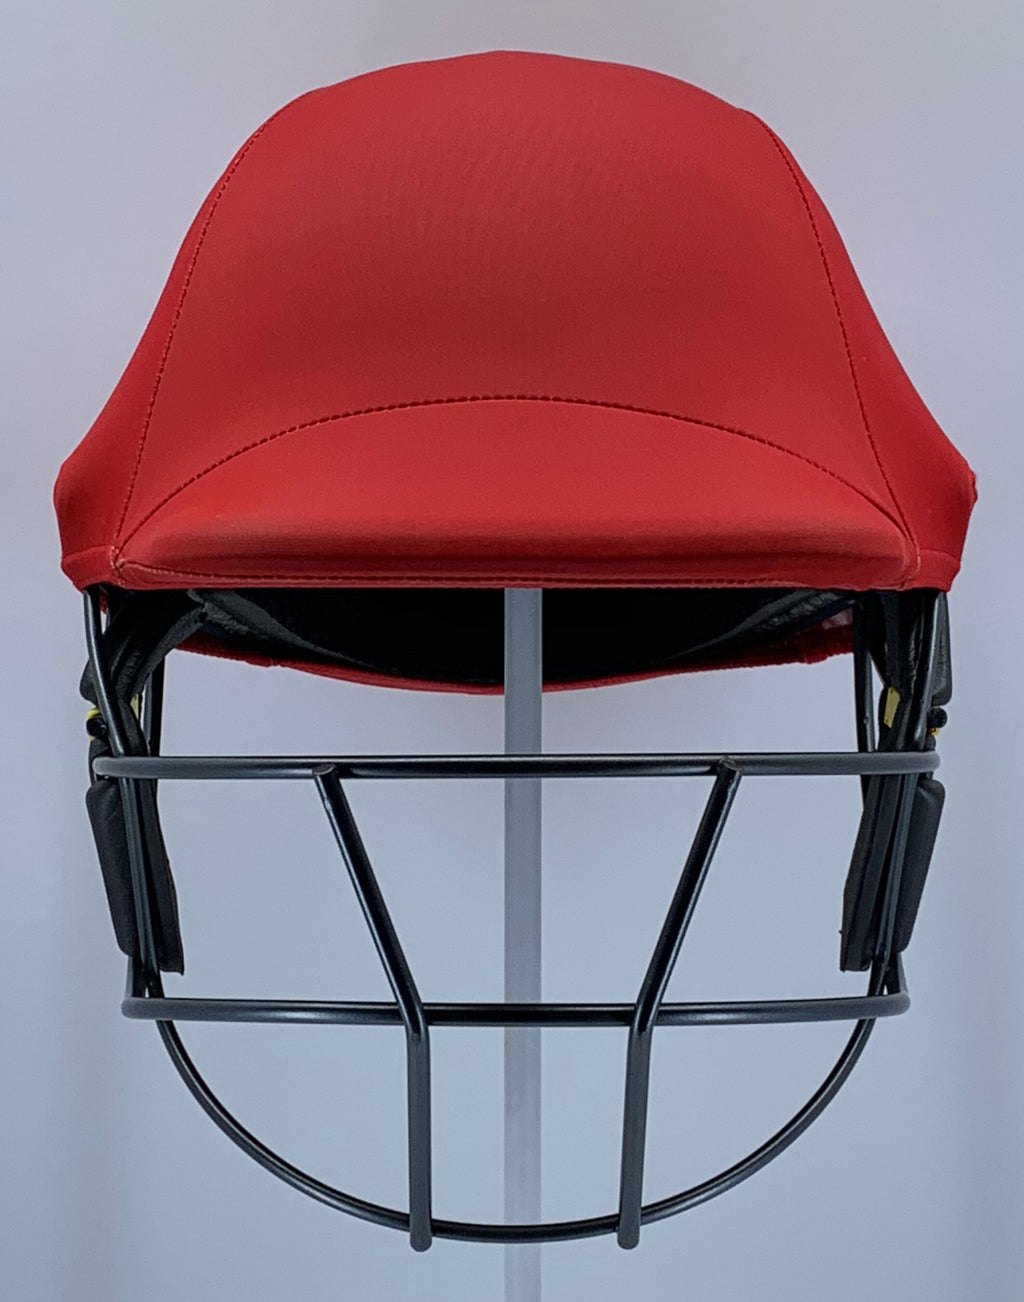 Cricket Helmet Cover Red